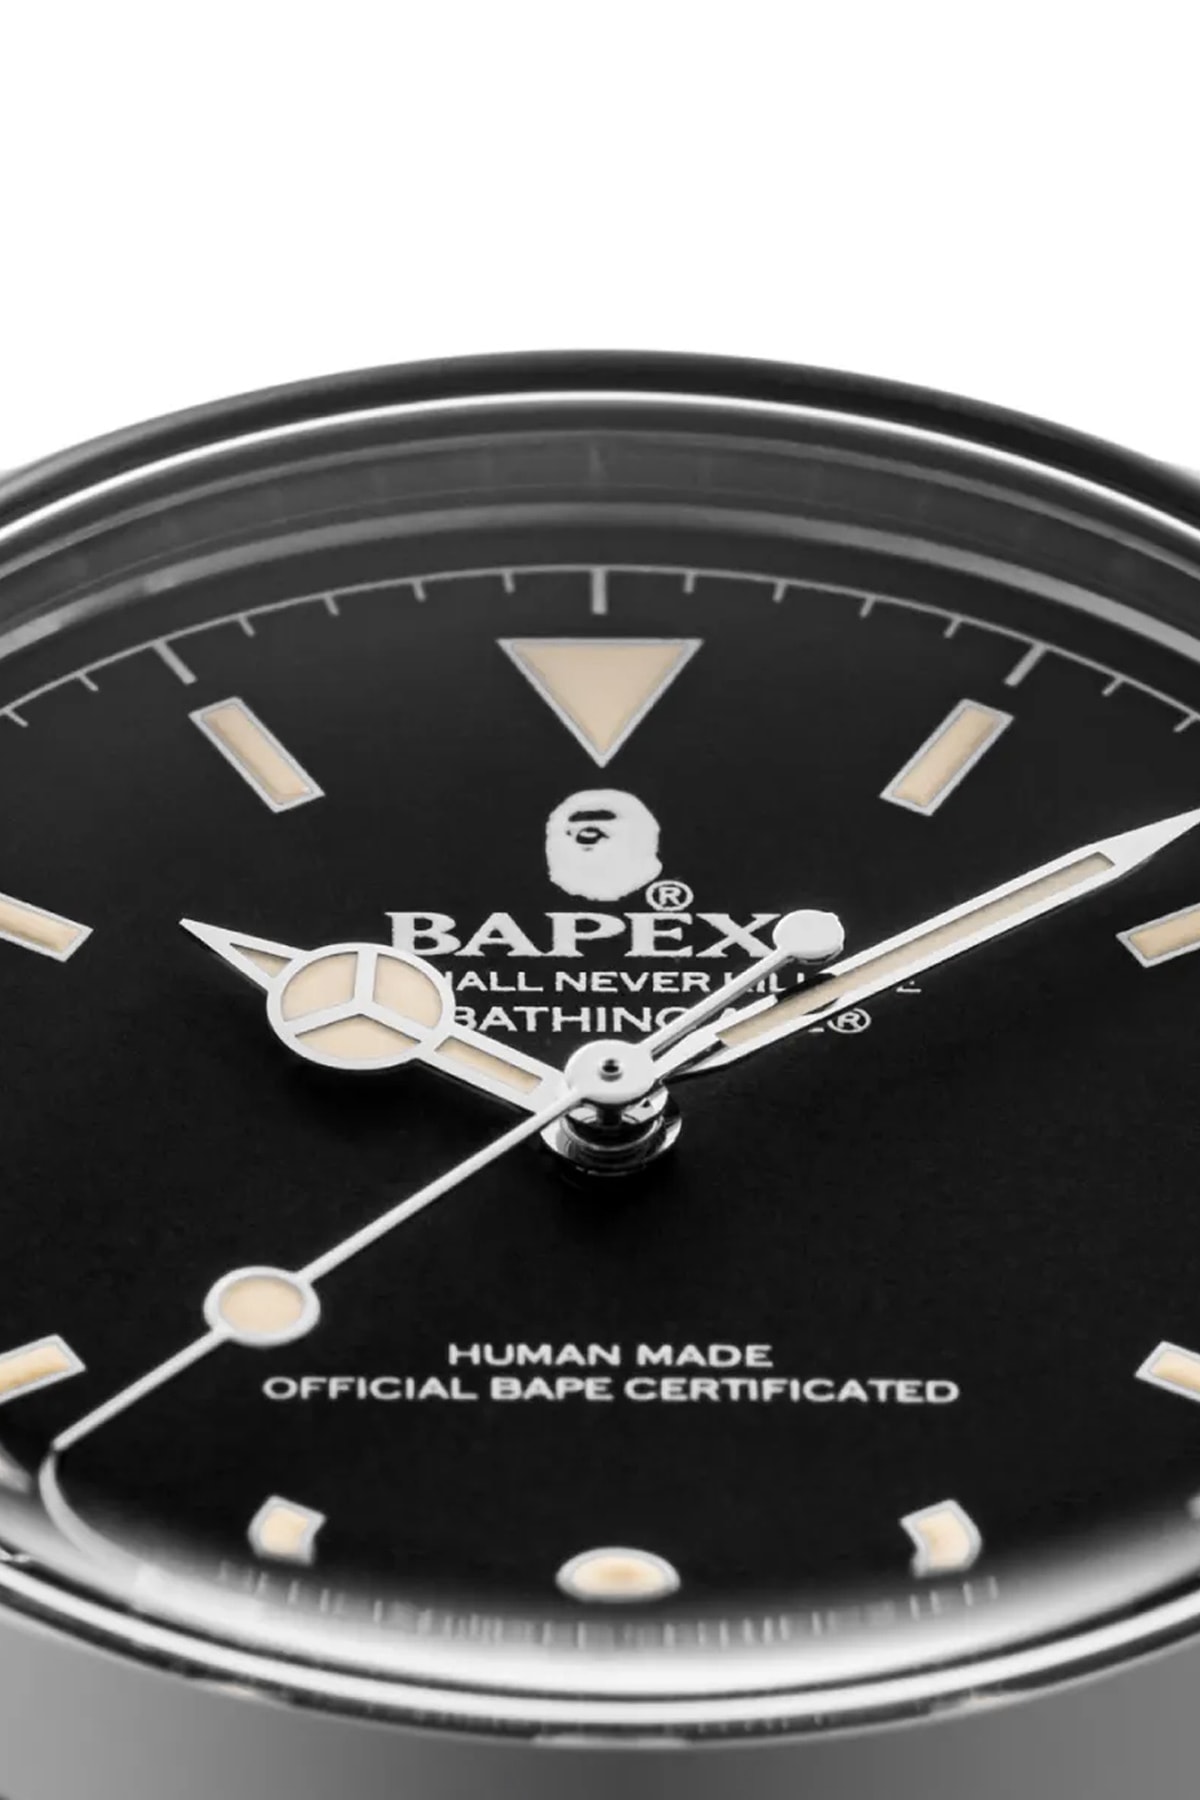 A BATHING APE® 推出全新 Classic BAPEX® 錶款